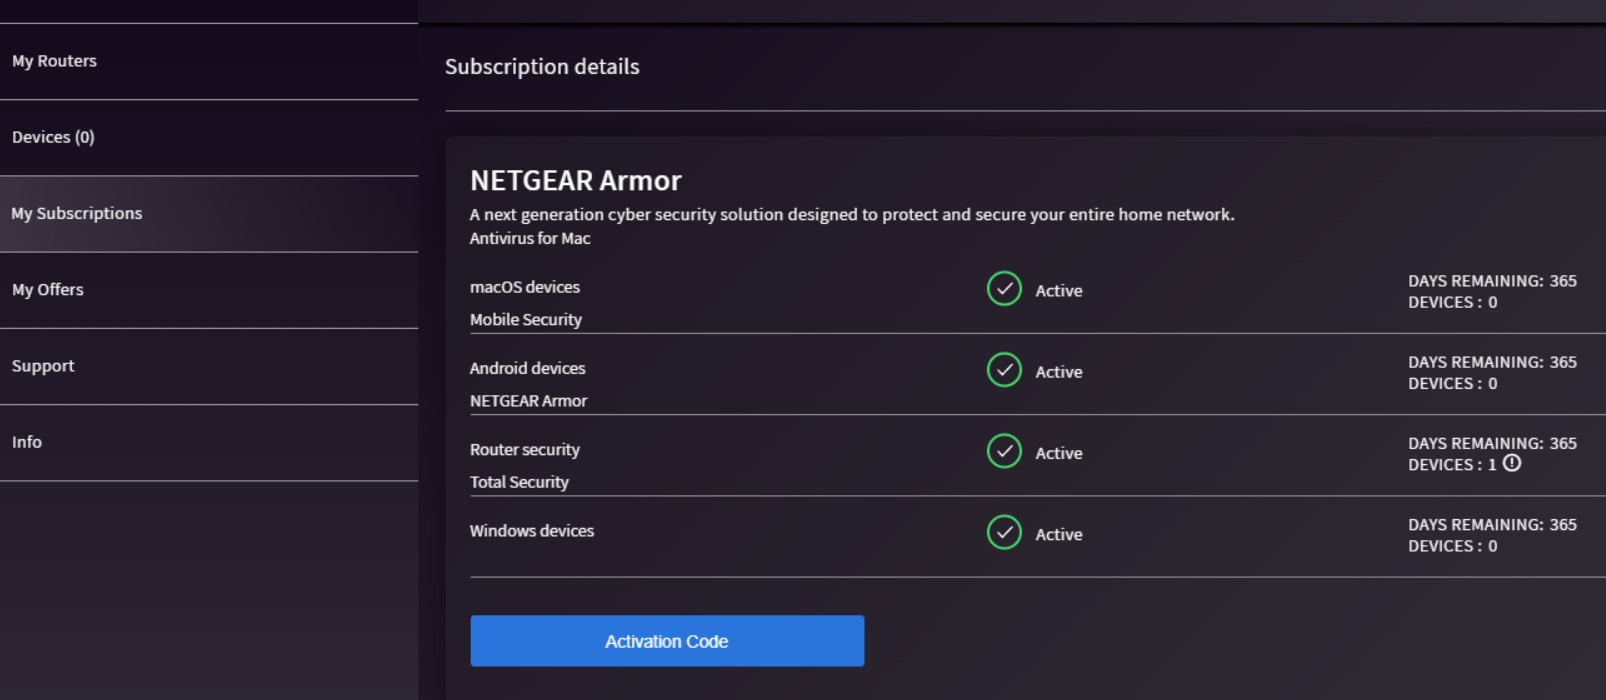 NETGEAR Armor subscription details